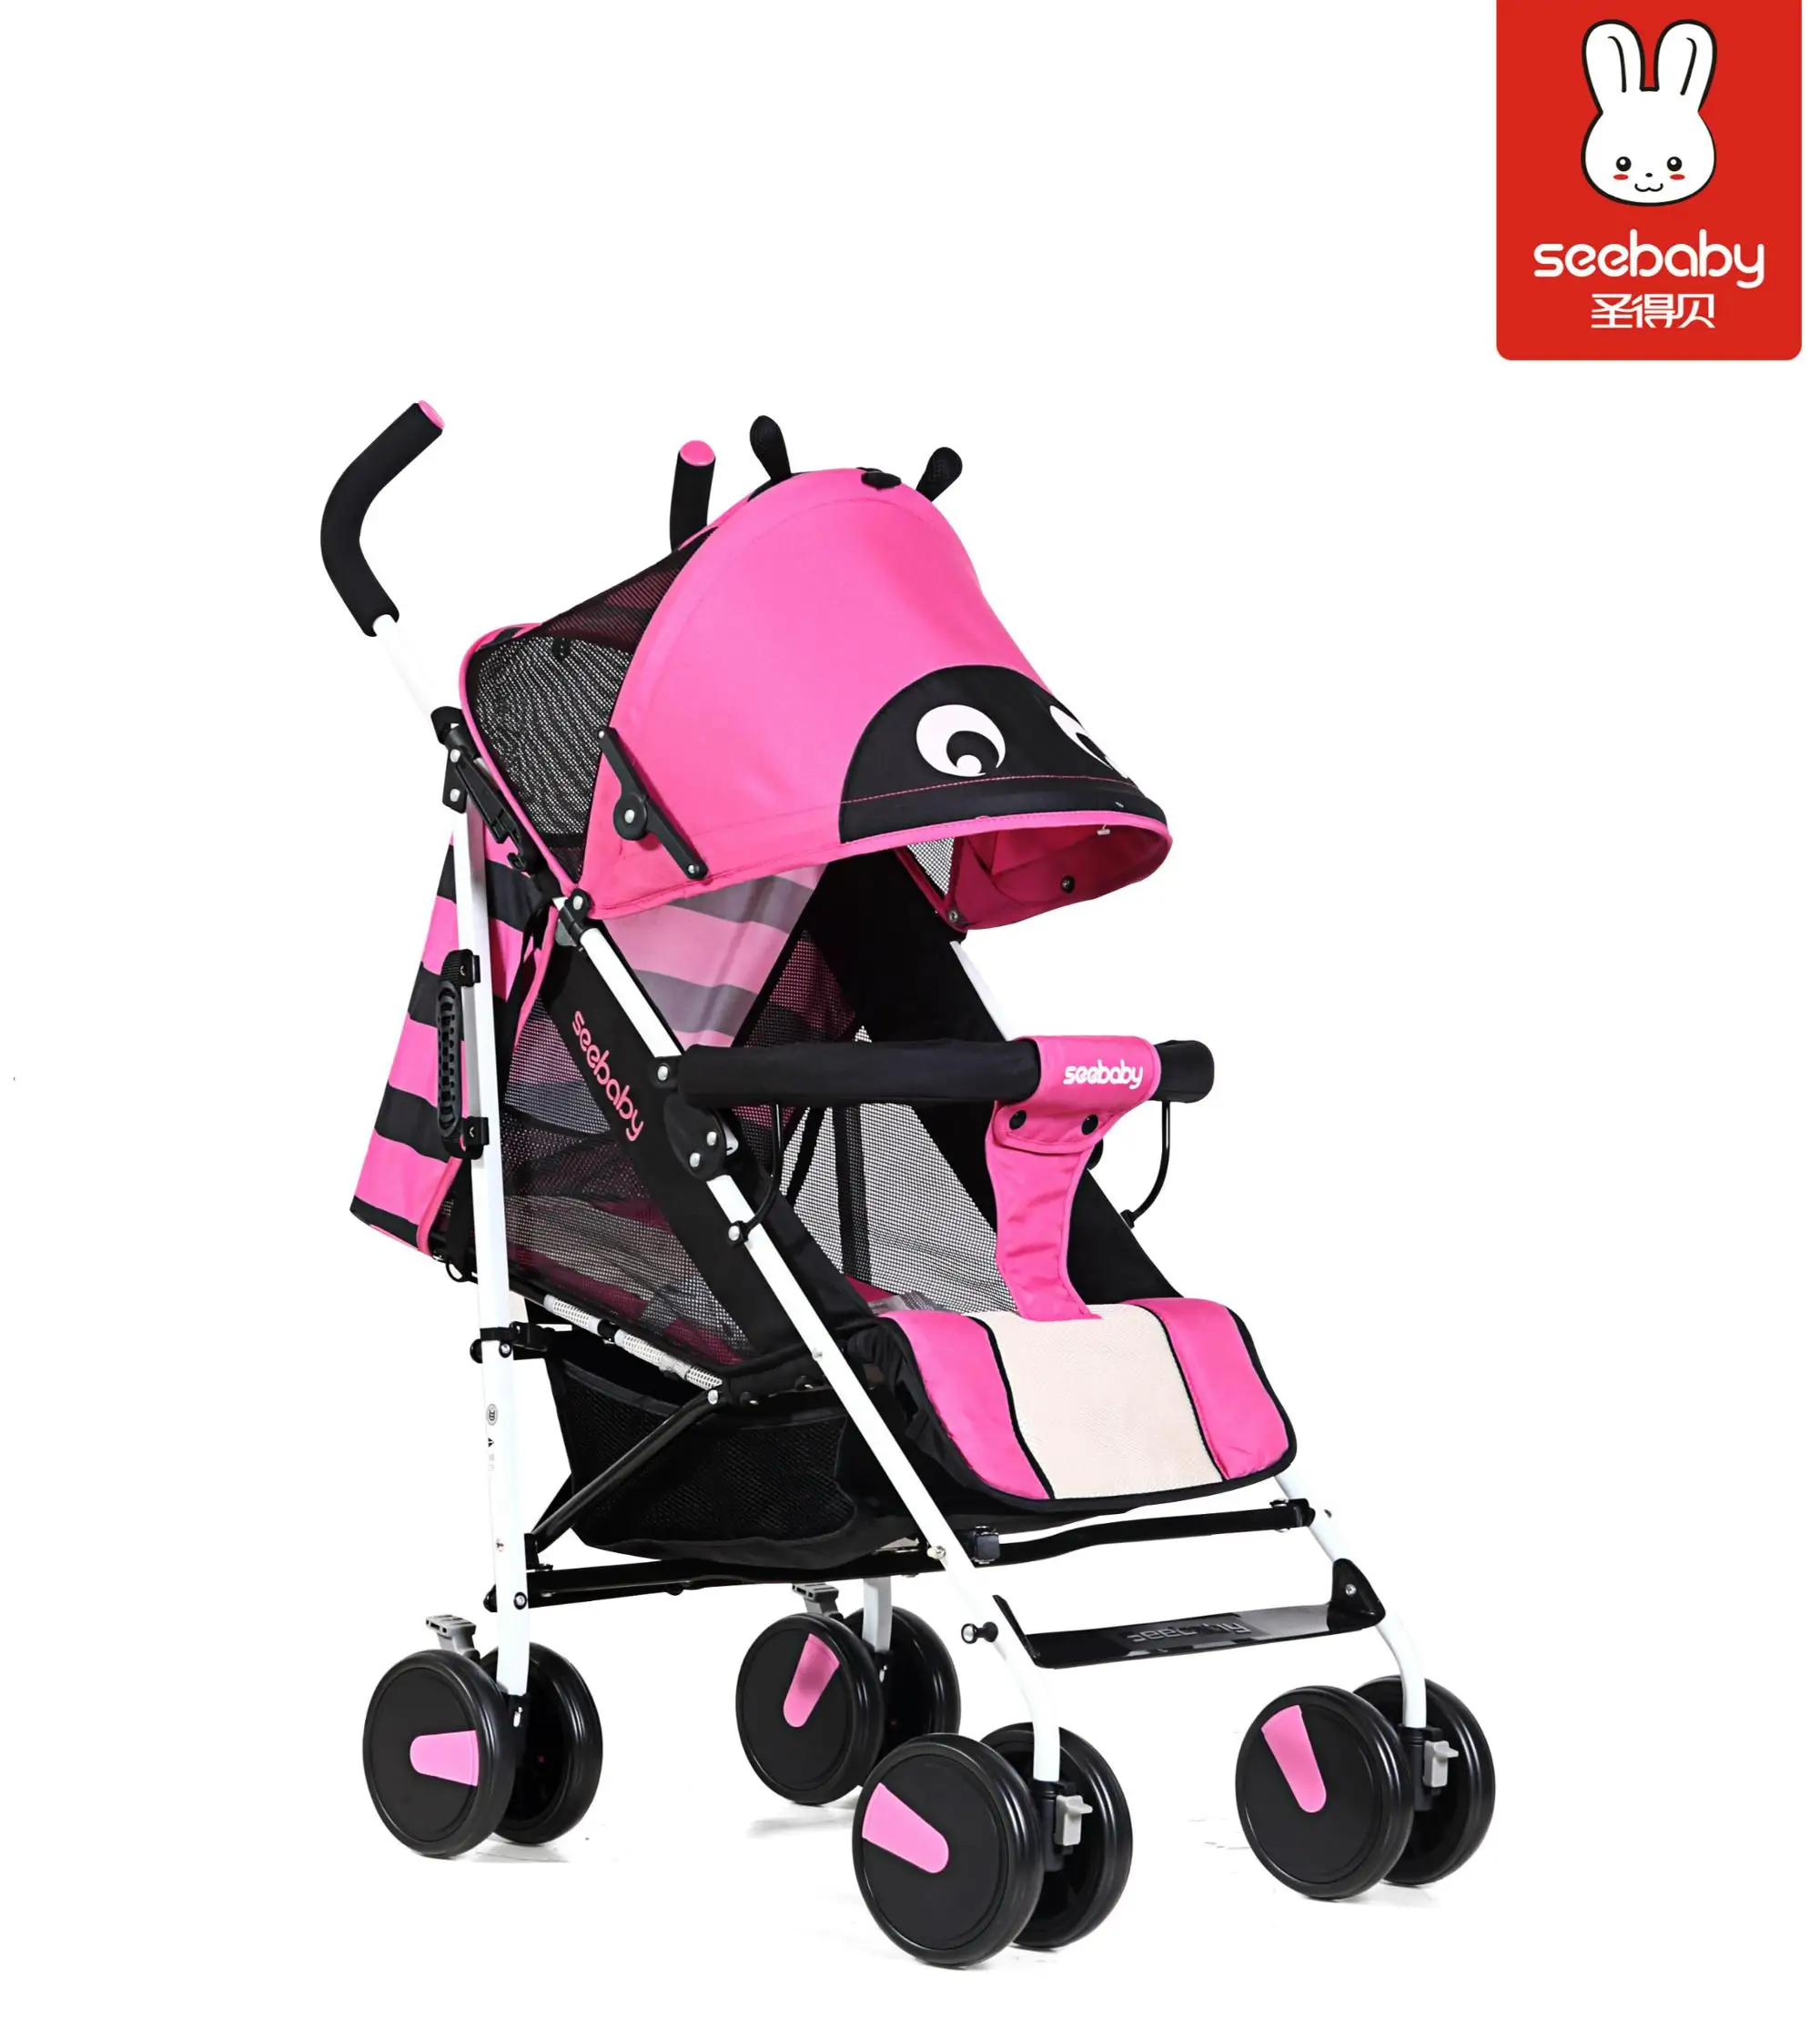 babysing stroller